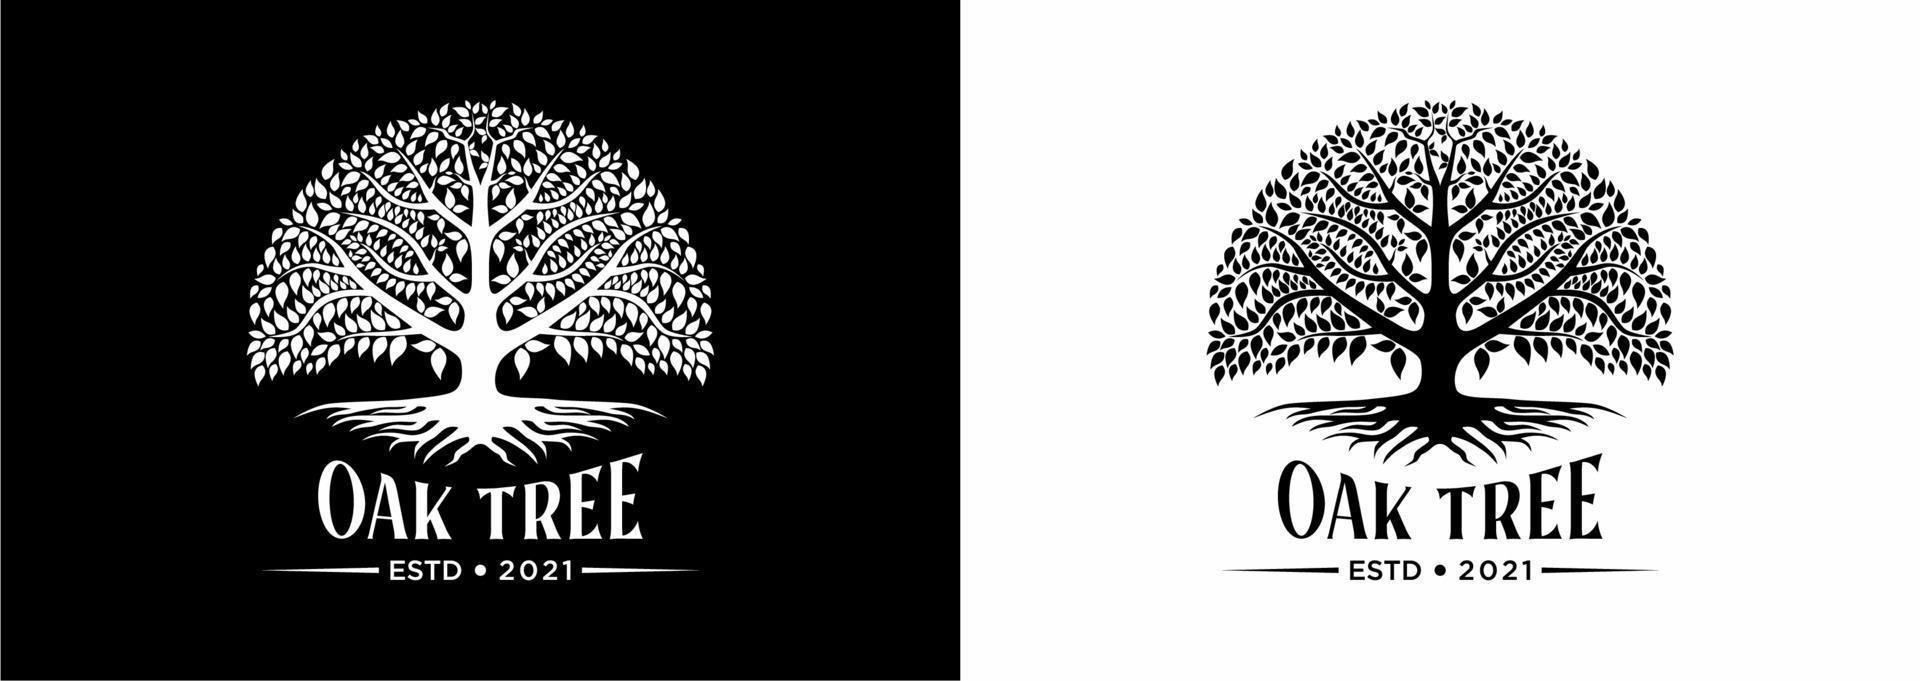 Baum des Lebens Eiche Banyan Blatt und Wurzel Siegel Emblem Stempel Logo Design Inspiration vektor